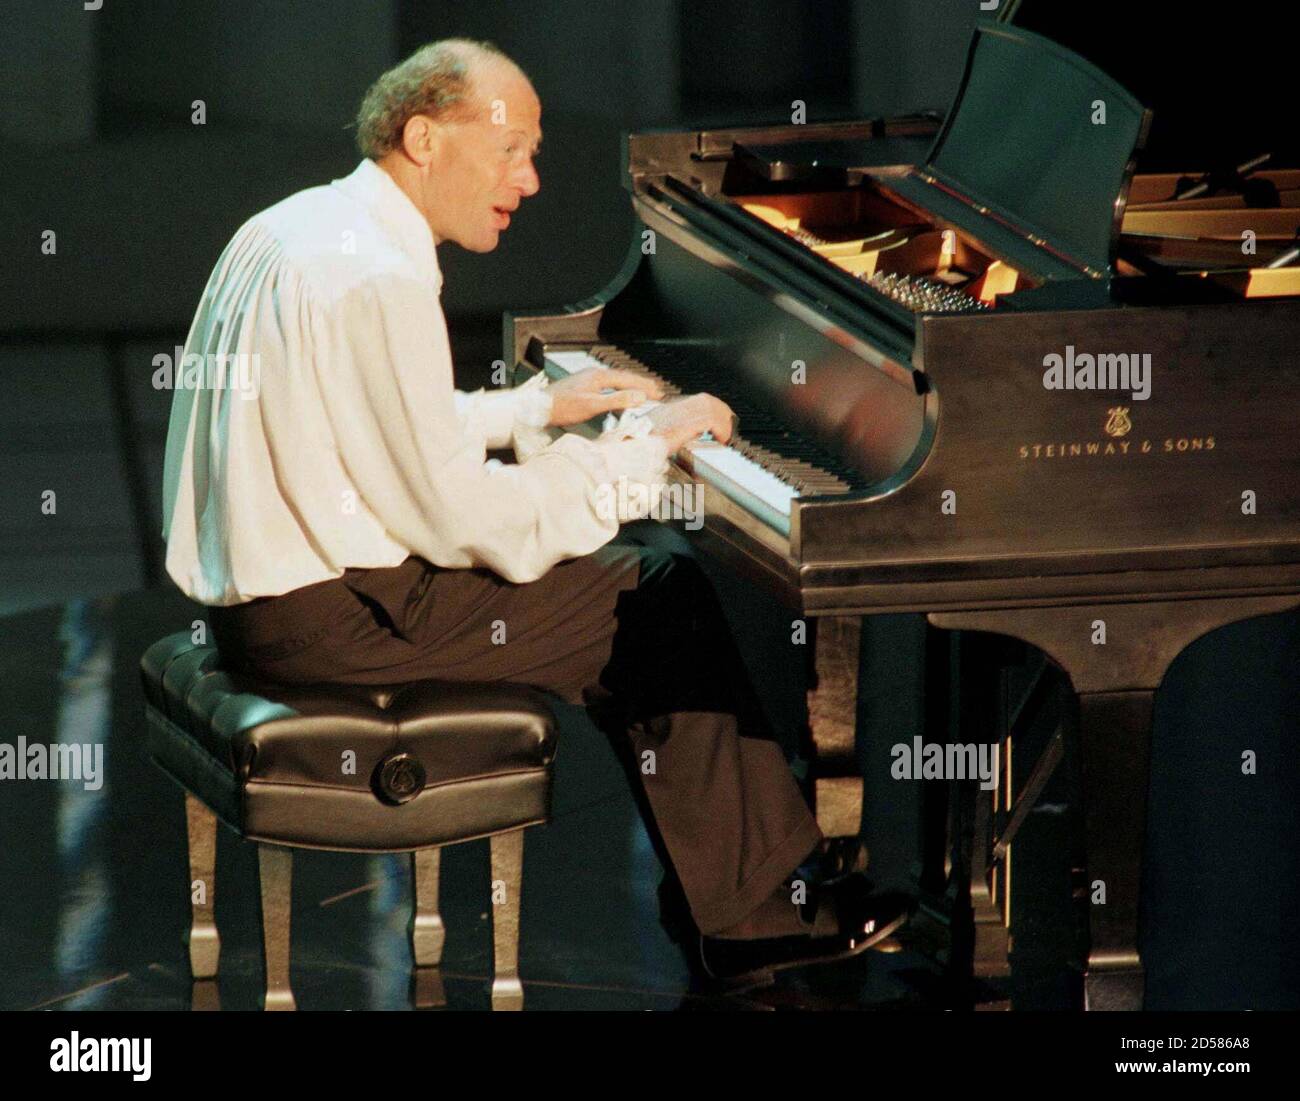 Australian pianist david helfgott hi-res stock photography and images -  Alamy